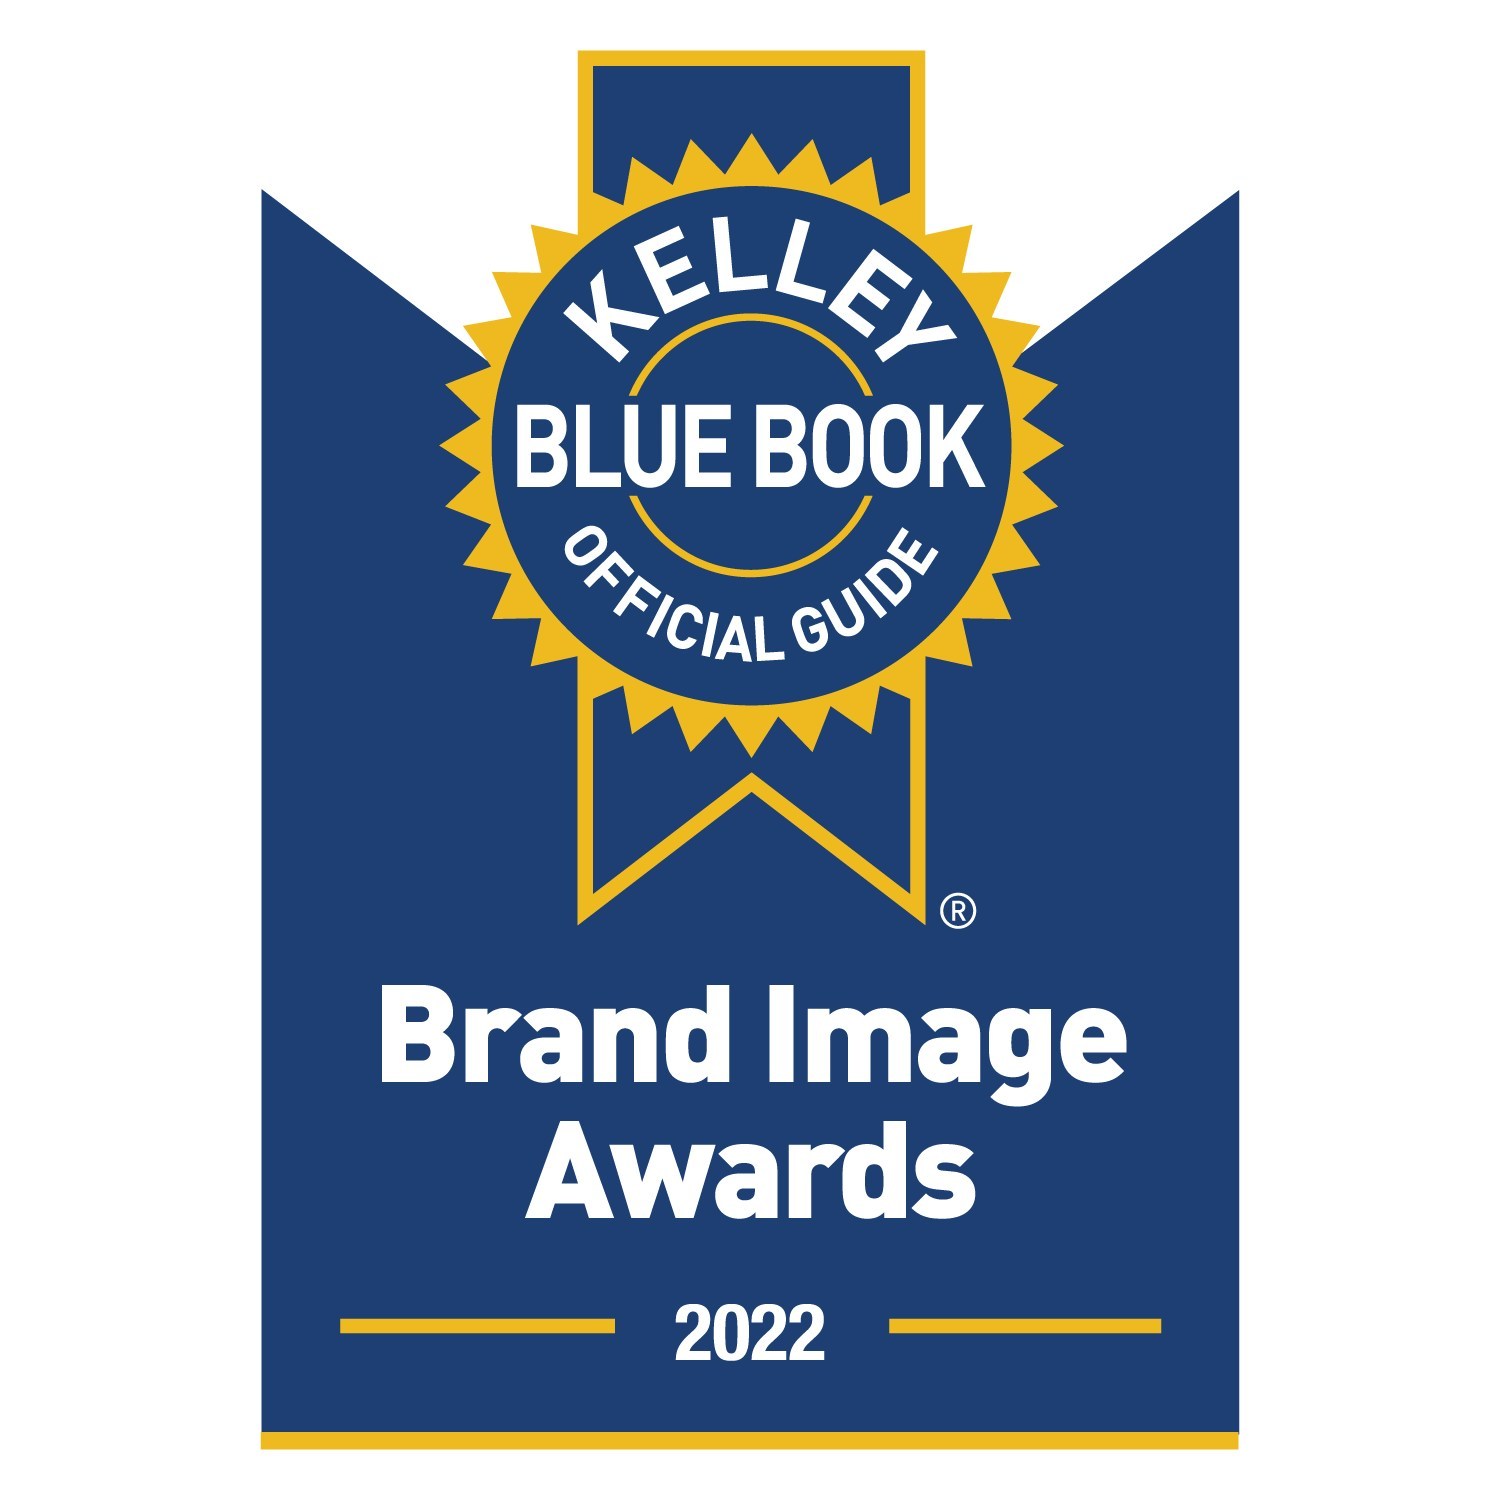 Kelley Blue Book Announces 2022 Brand Image Award Winners Mar 10, 2022